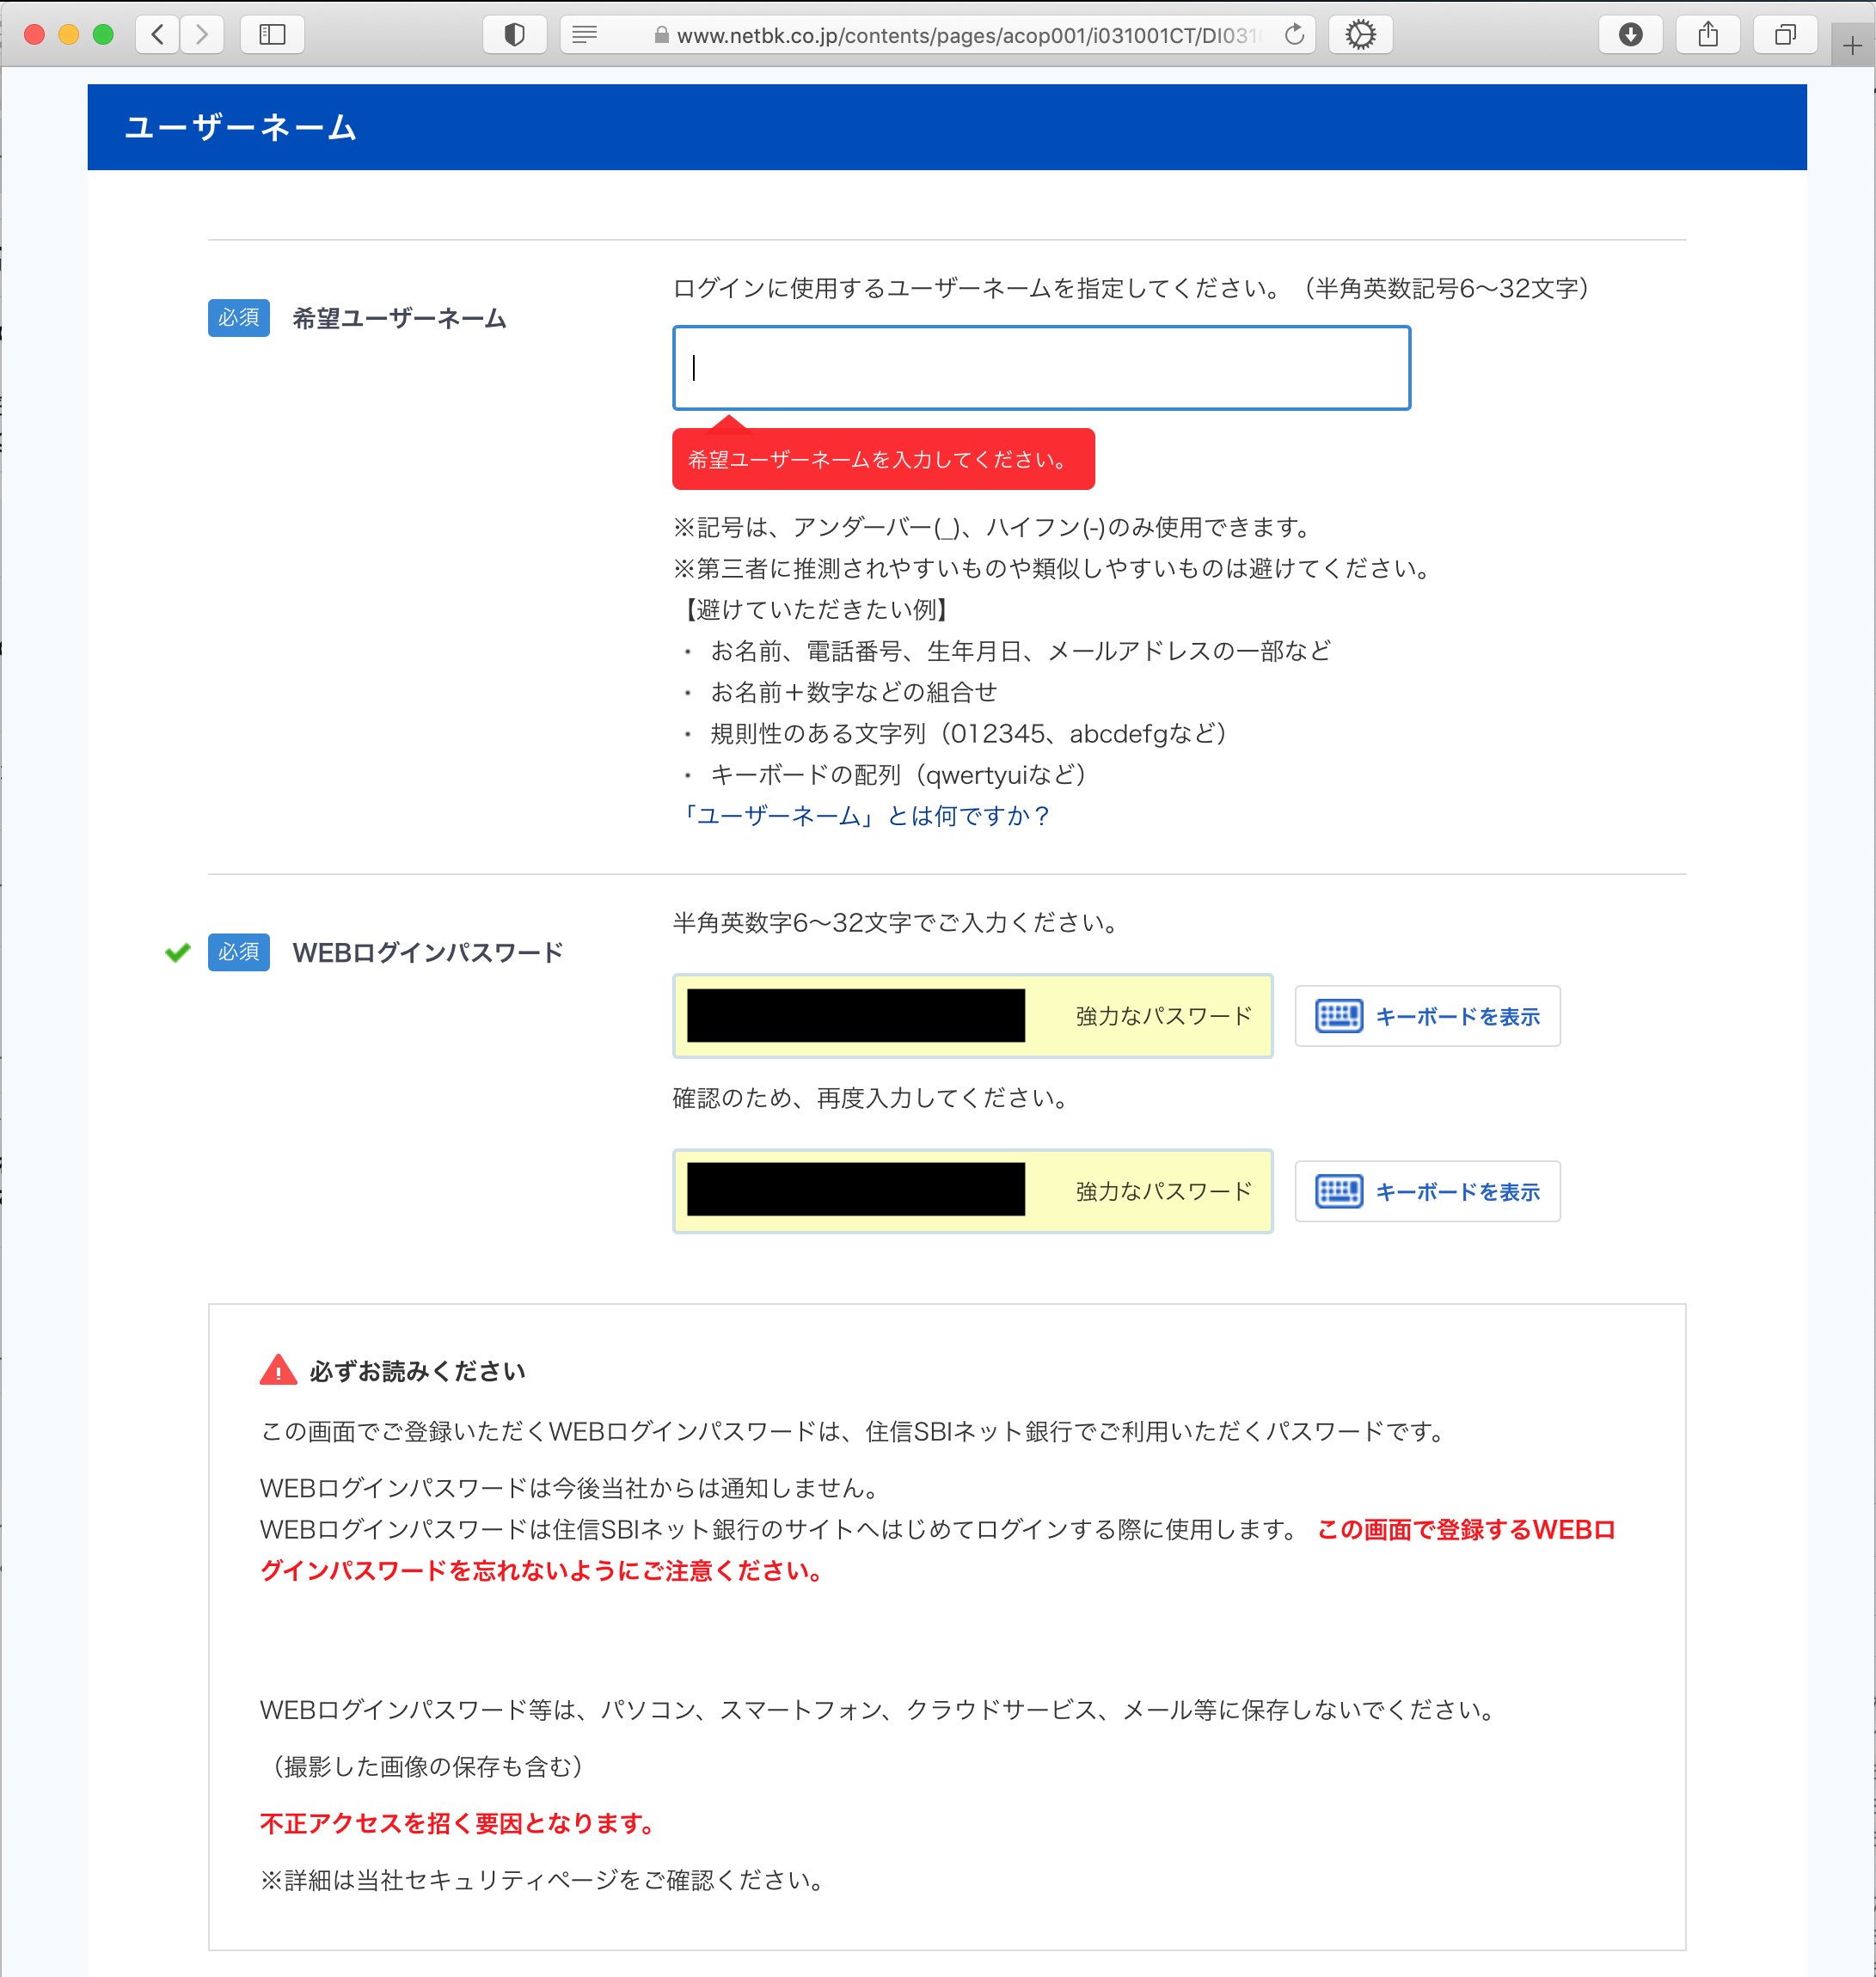 Hiromitsu Takagi On Twitter 住信sbiネット銀行の場合も 口座開設時に記入するのはキャッシュカード デビットカード 暗証 番号だけのようで 初回利用時には郵送で 仮ログインパスワード が送られてくるようだ 文字種や長さは不明だが Https T Co